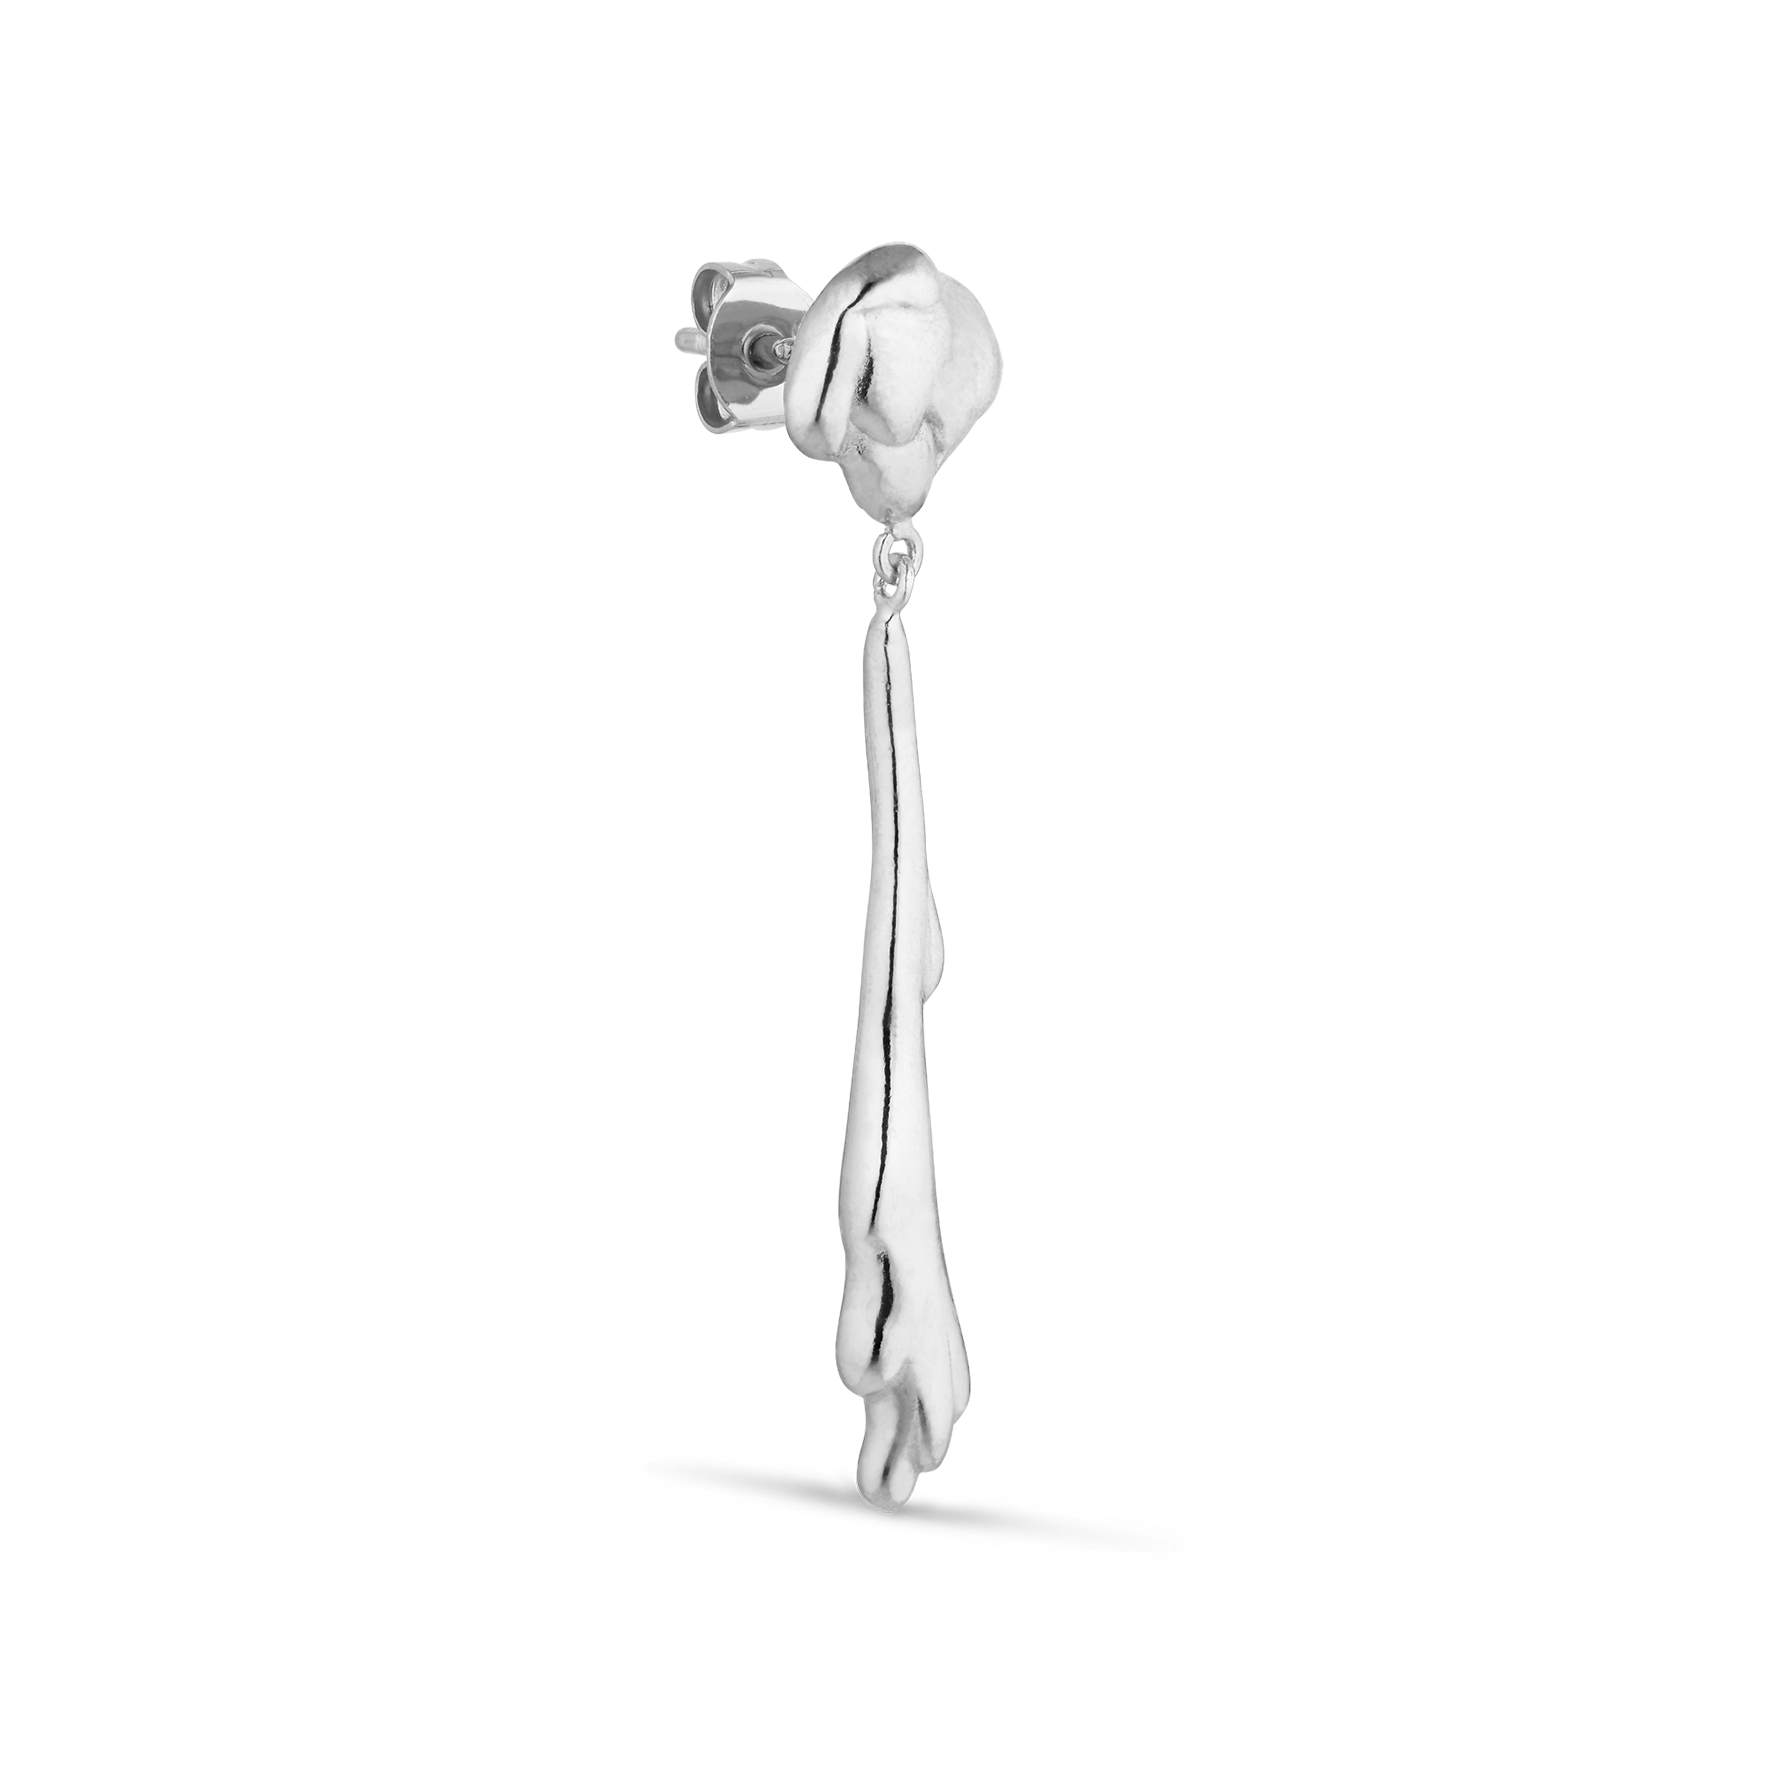 Drippy Earring With Drop Pendant från Jane Kønig i Silver Sterling 925